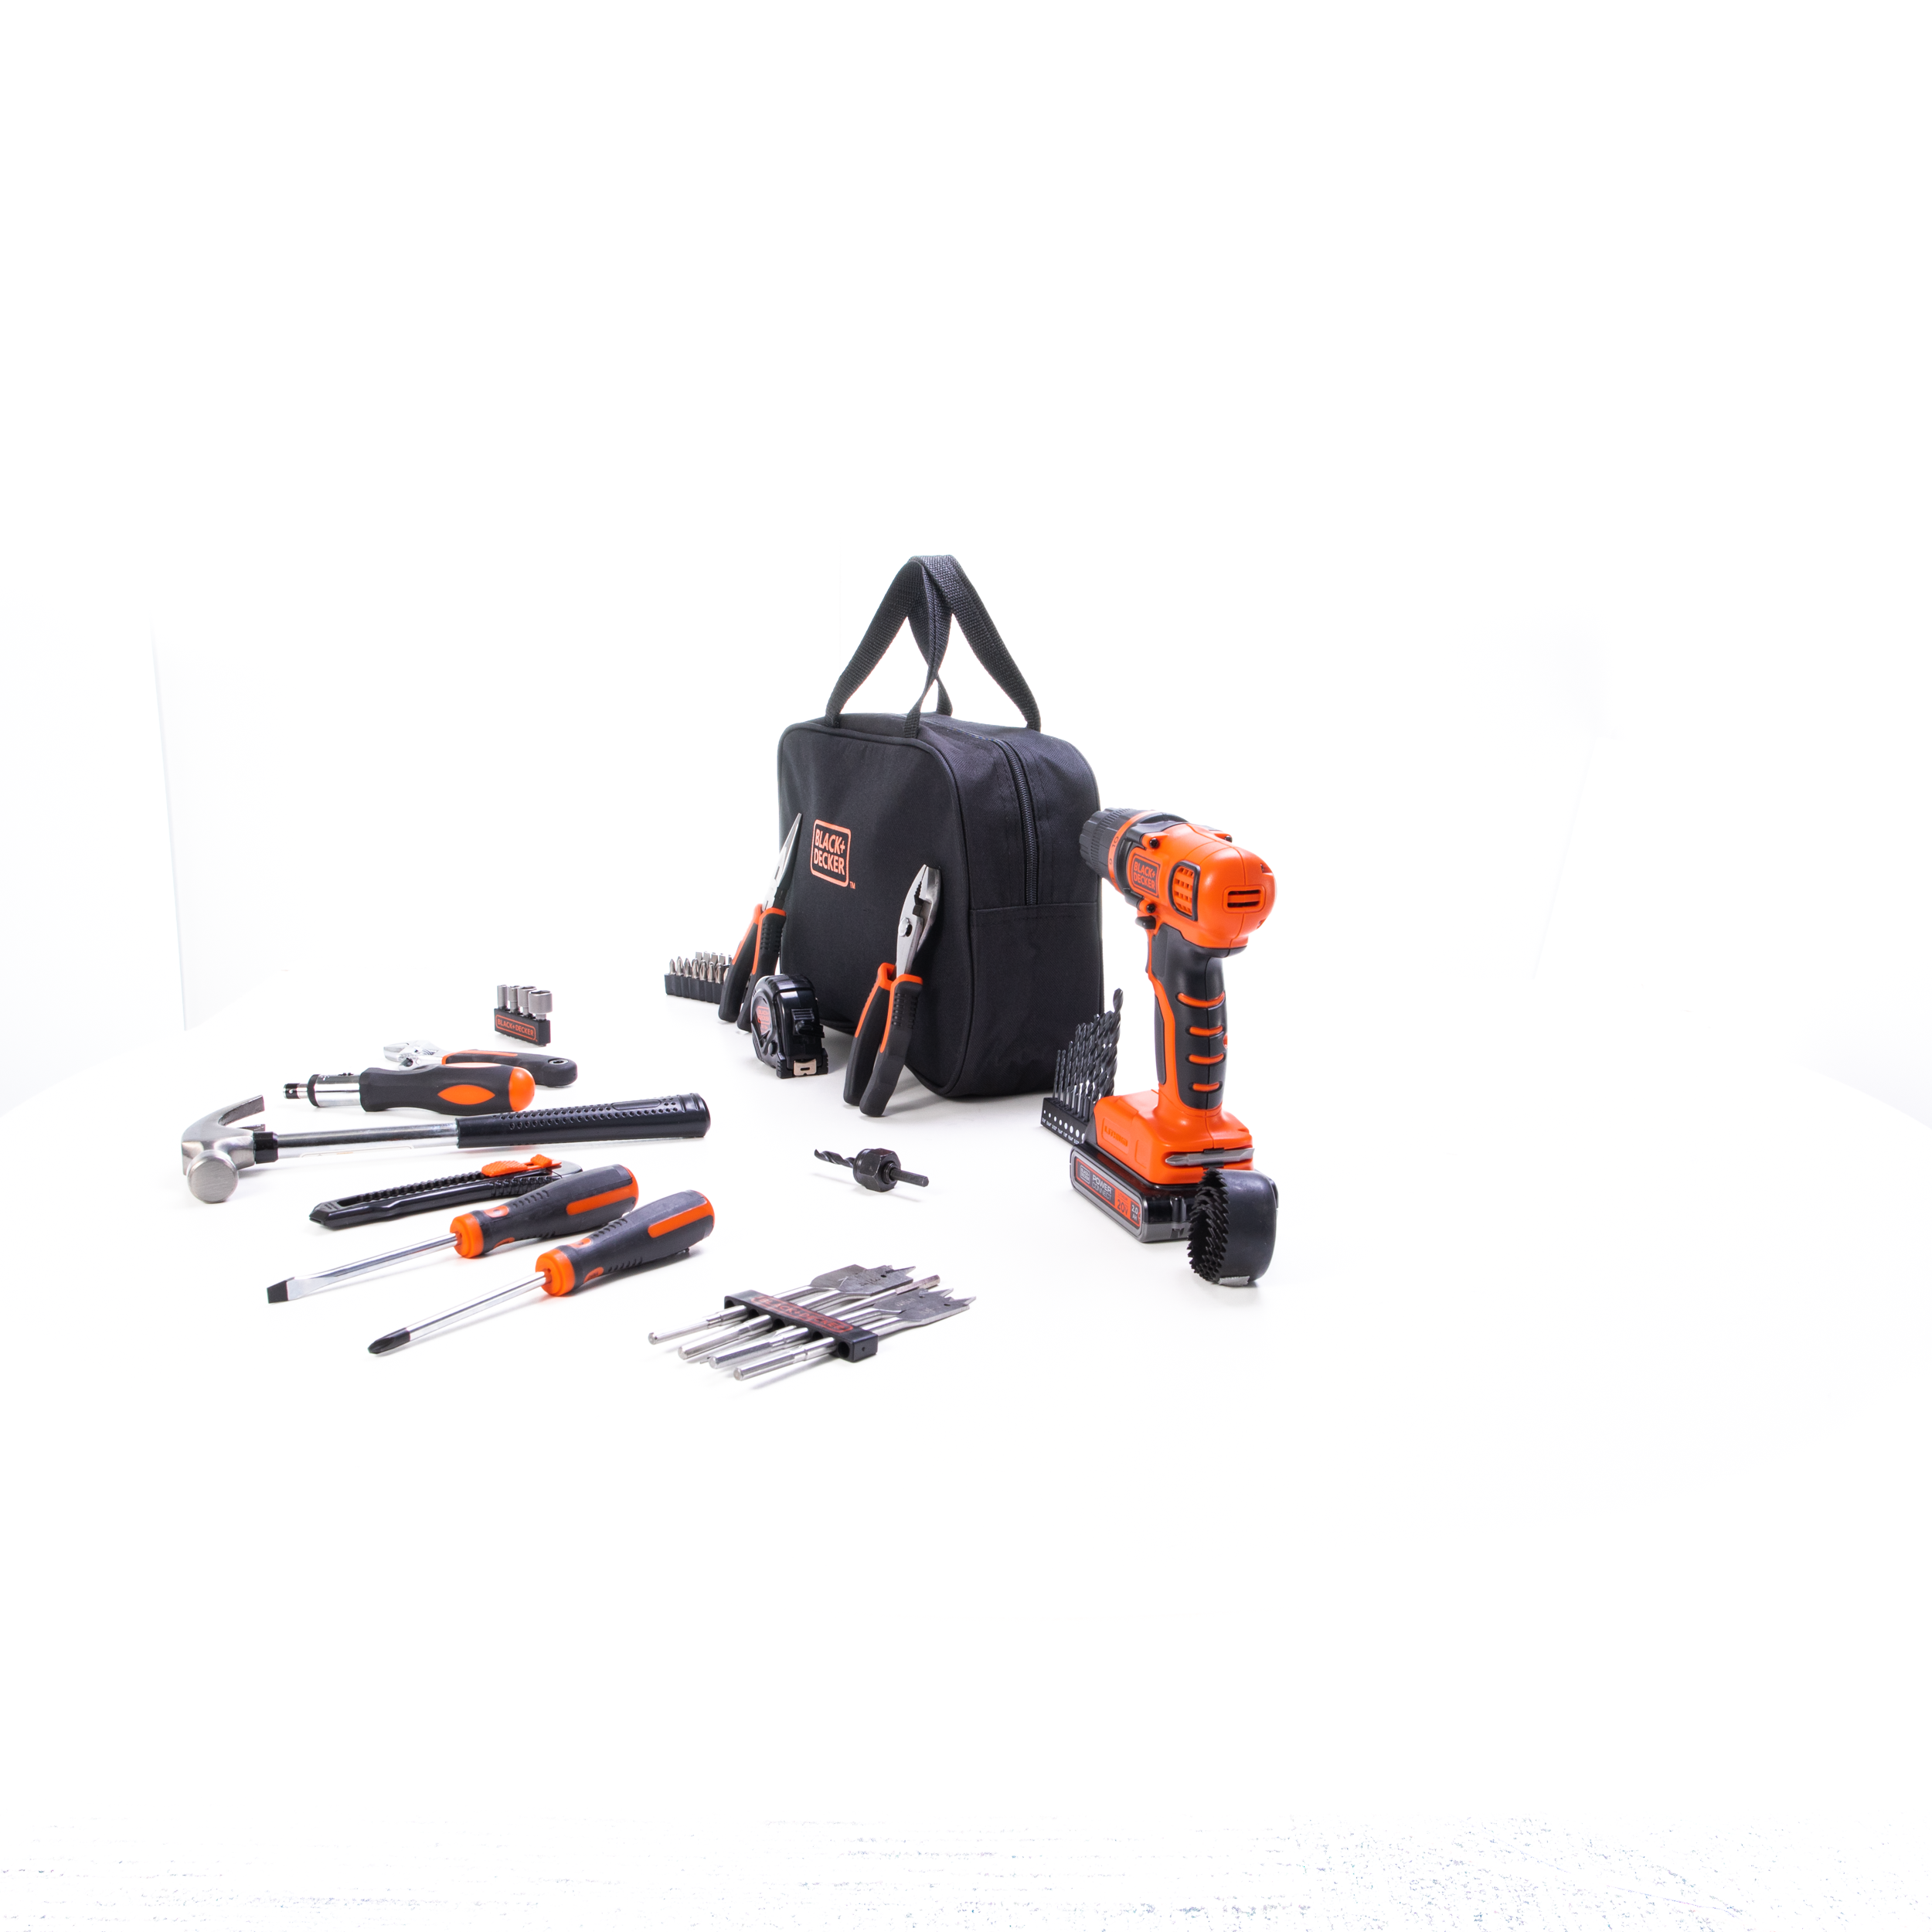 Black & Decker LDX120PK 20V Max Lithium Drill & Project Kit